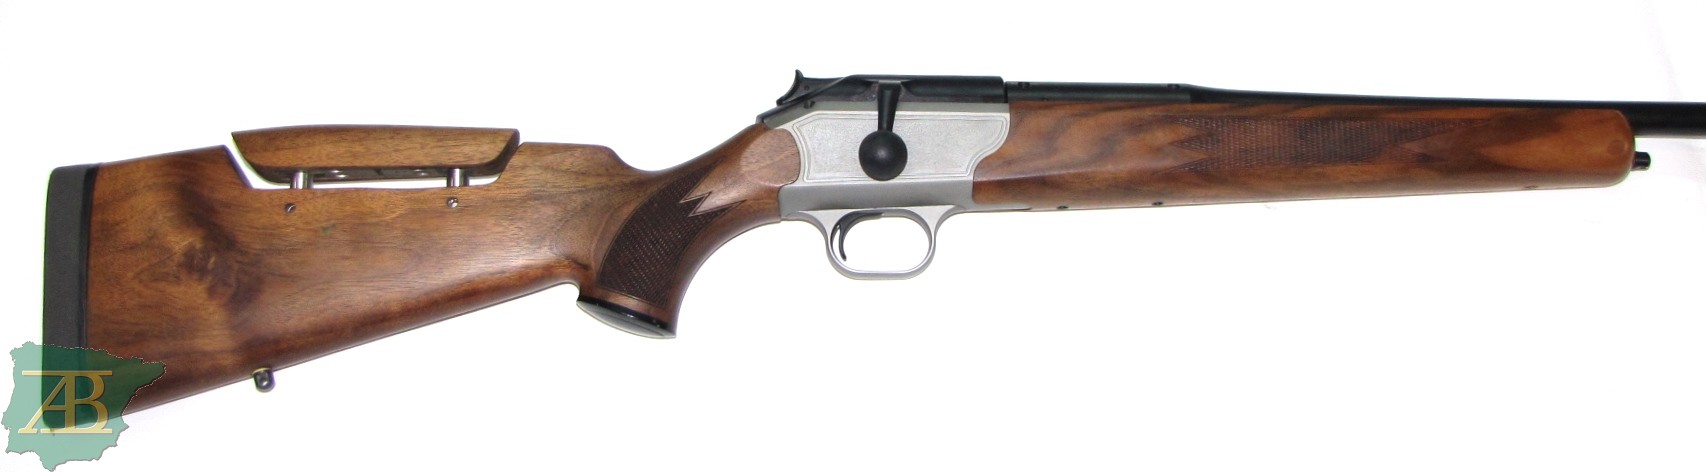 Rifle de cerrojo de caza BLASER R-93 Ref 7064-armeriaiberica-2